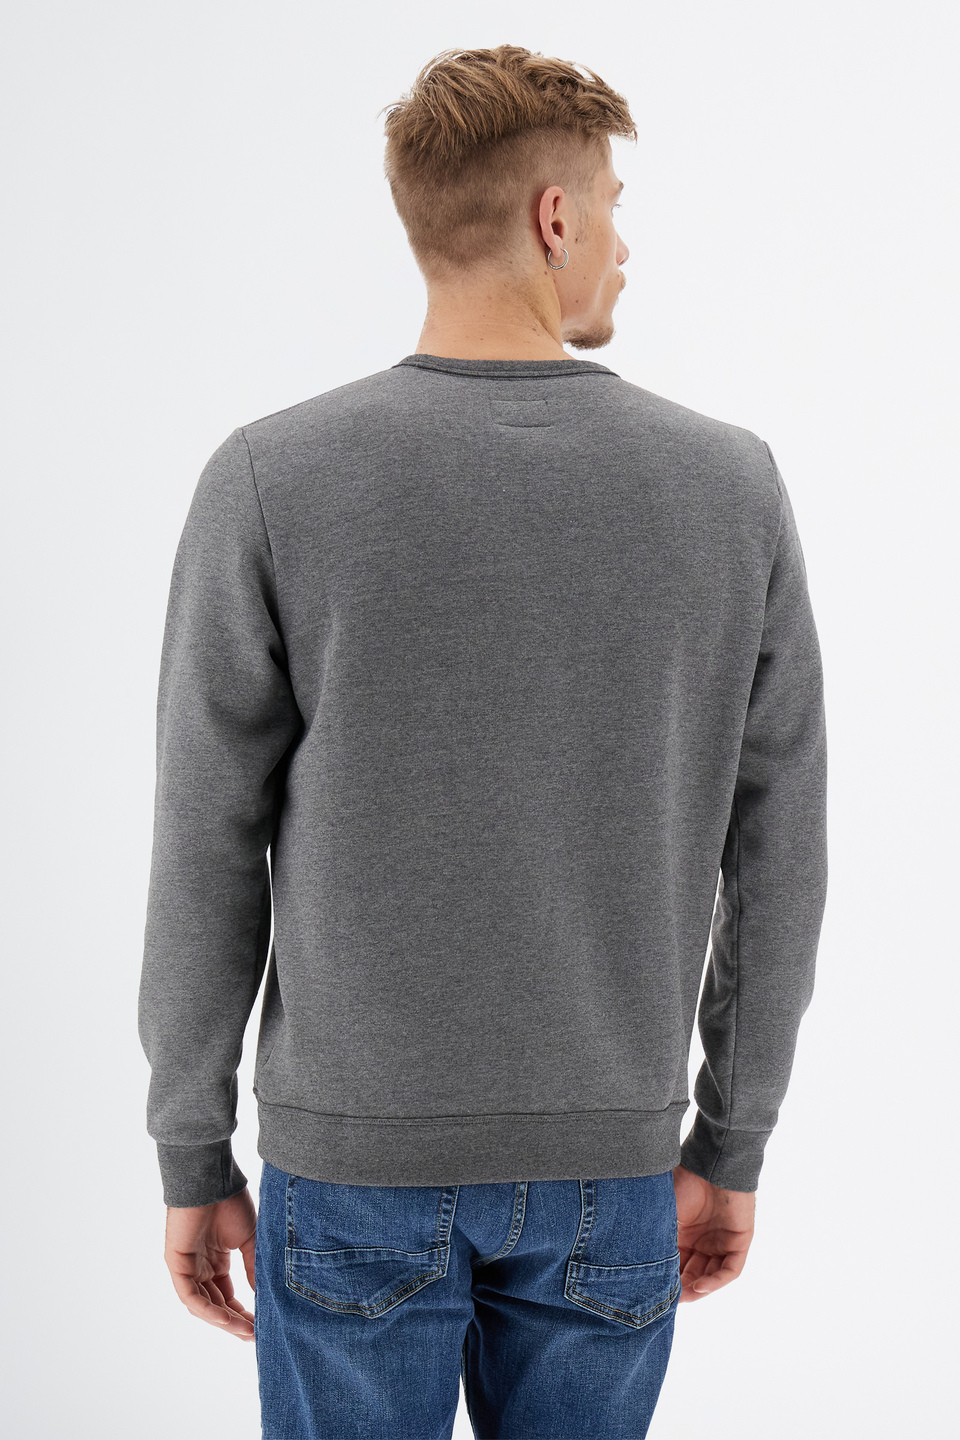 Men’s sweatshirt Leyendas Del Polo with long sleeves in regular fit fleece cotton | La Martina - Official Online Shop